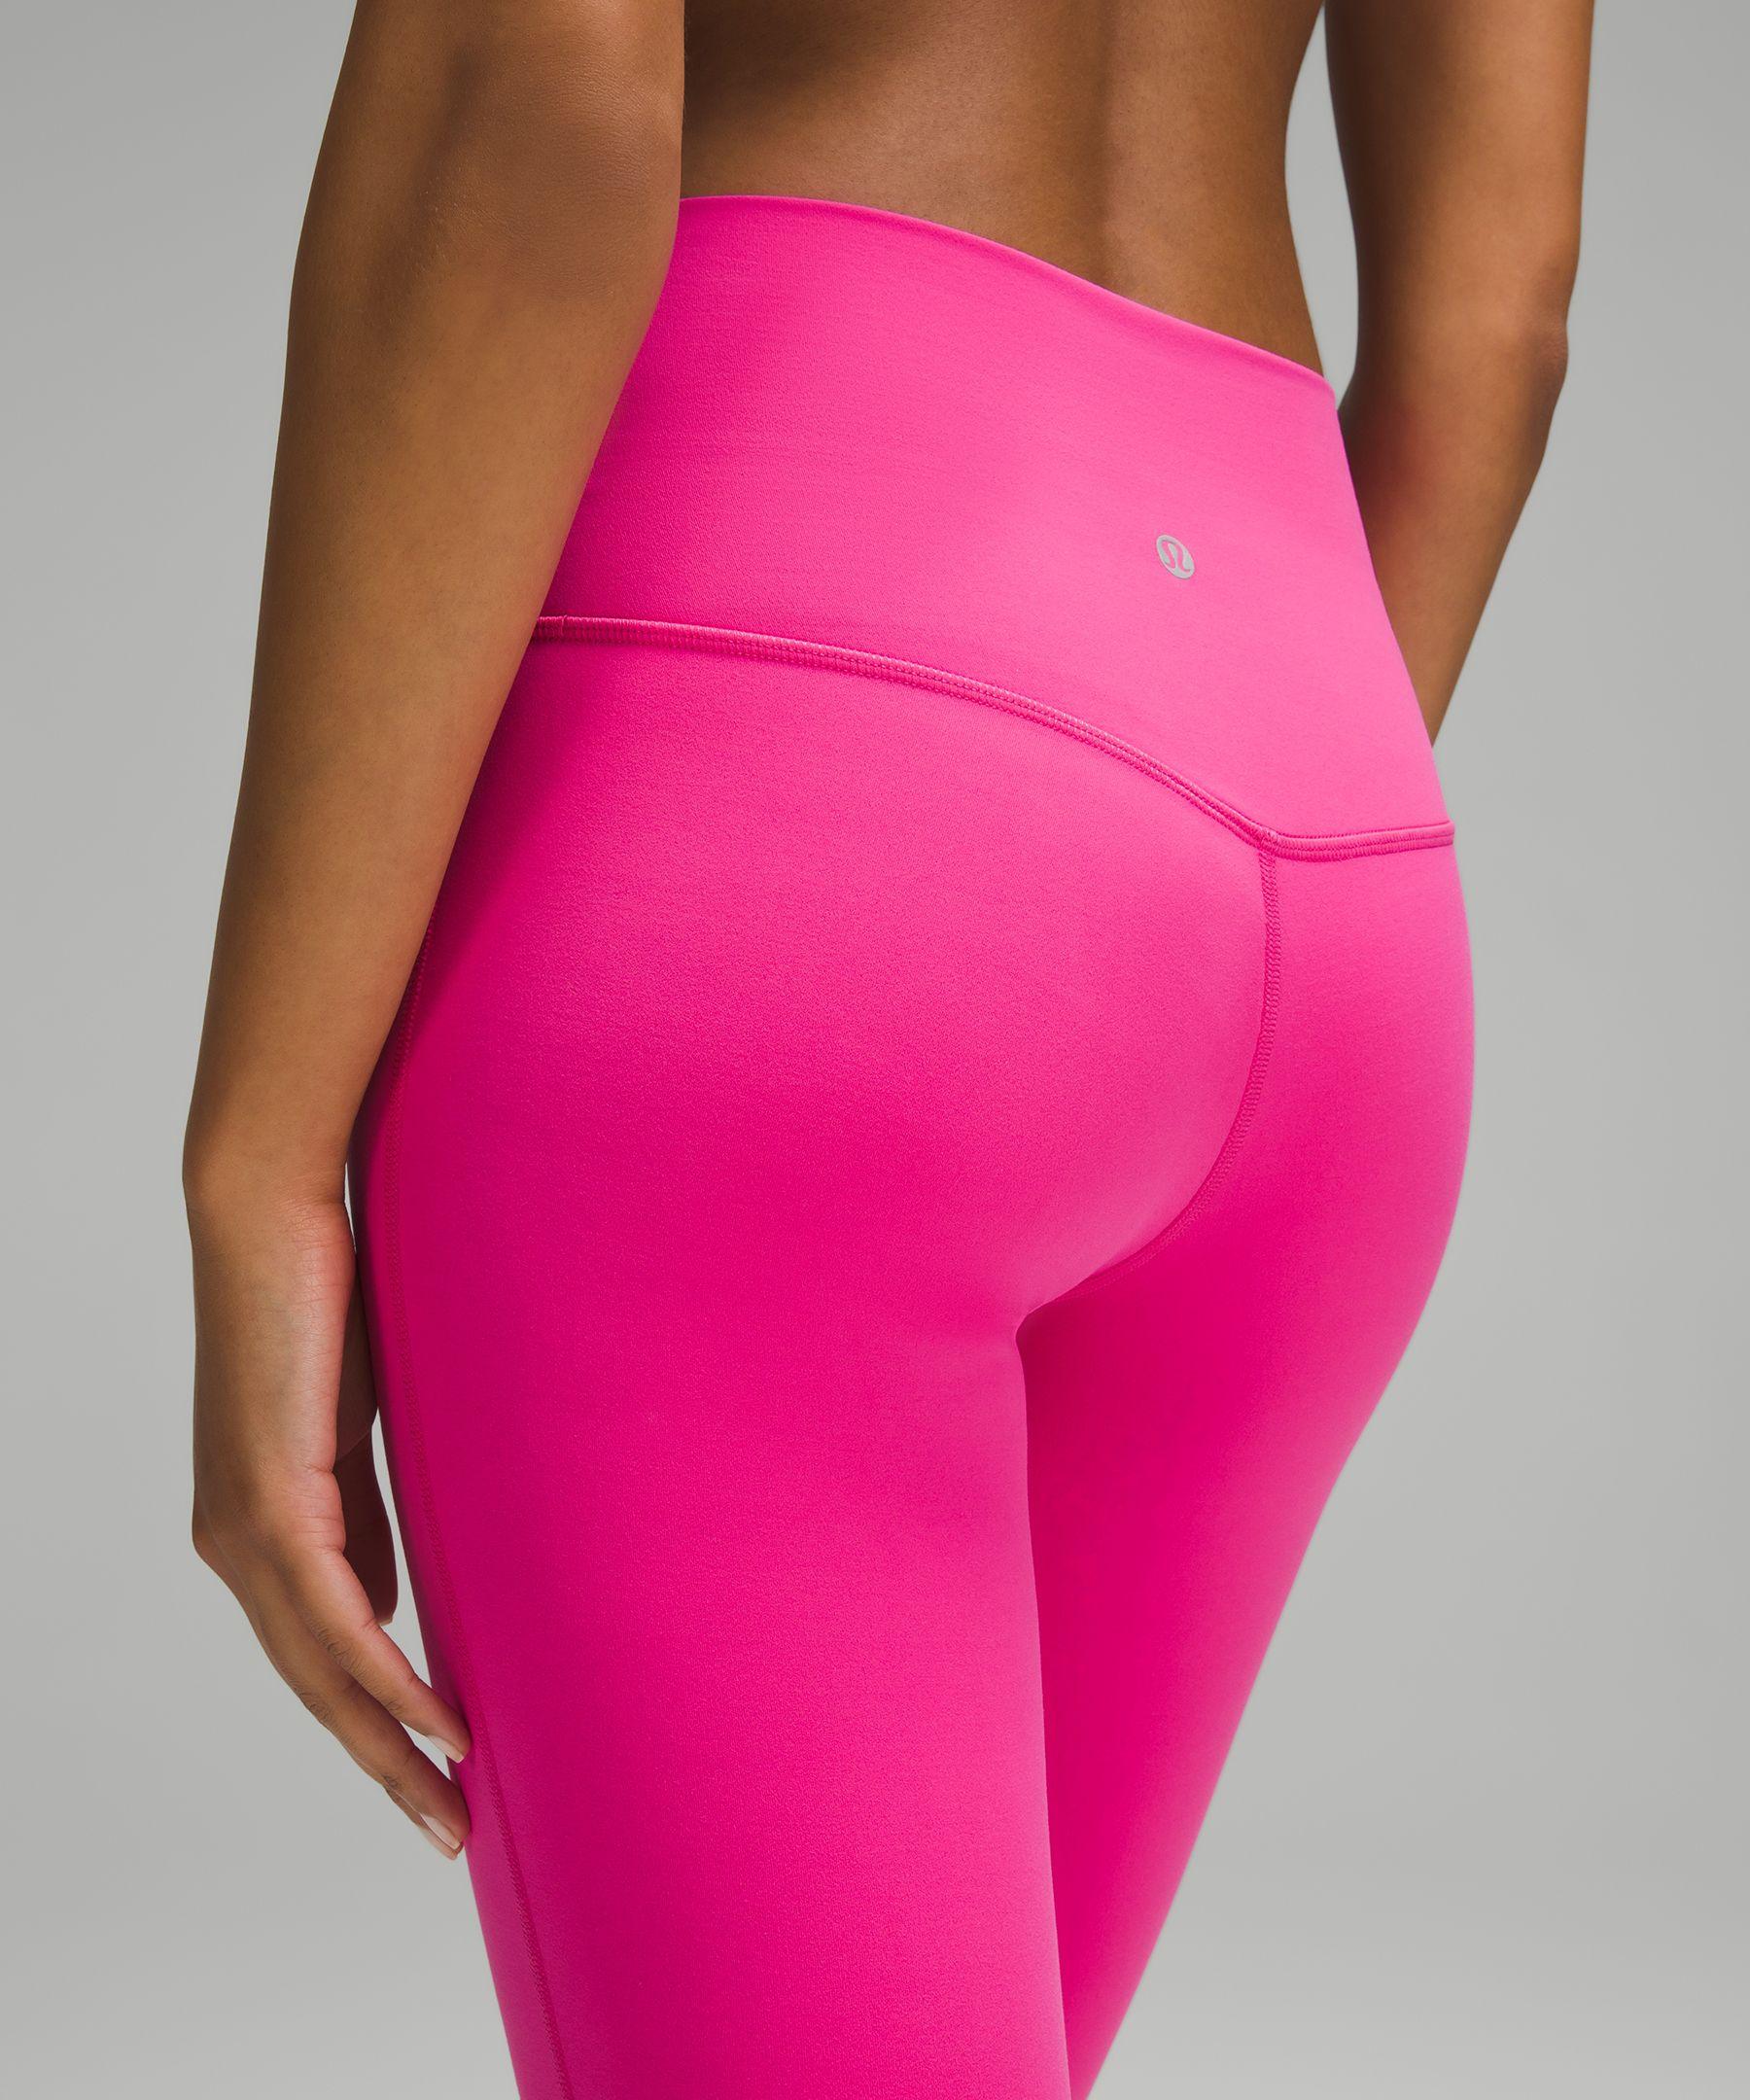 lululemon athletica Align High-rise Pants - 28 - Color Pink/neon